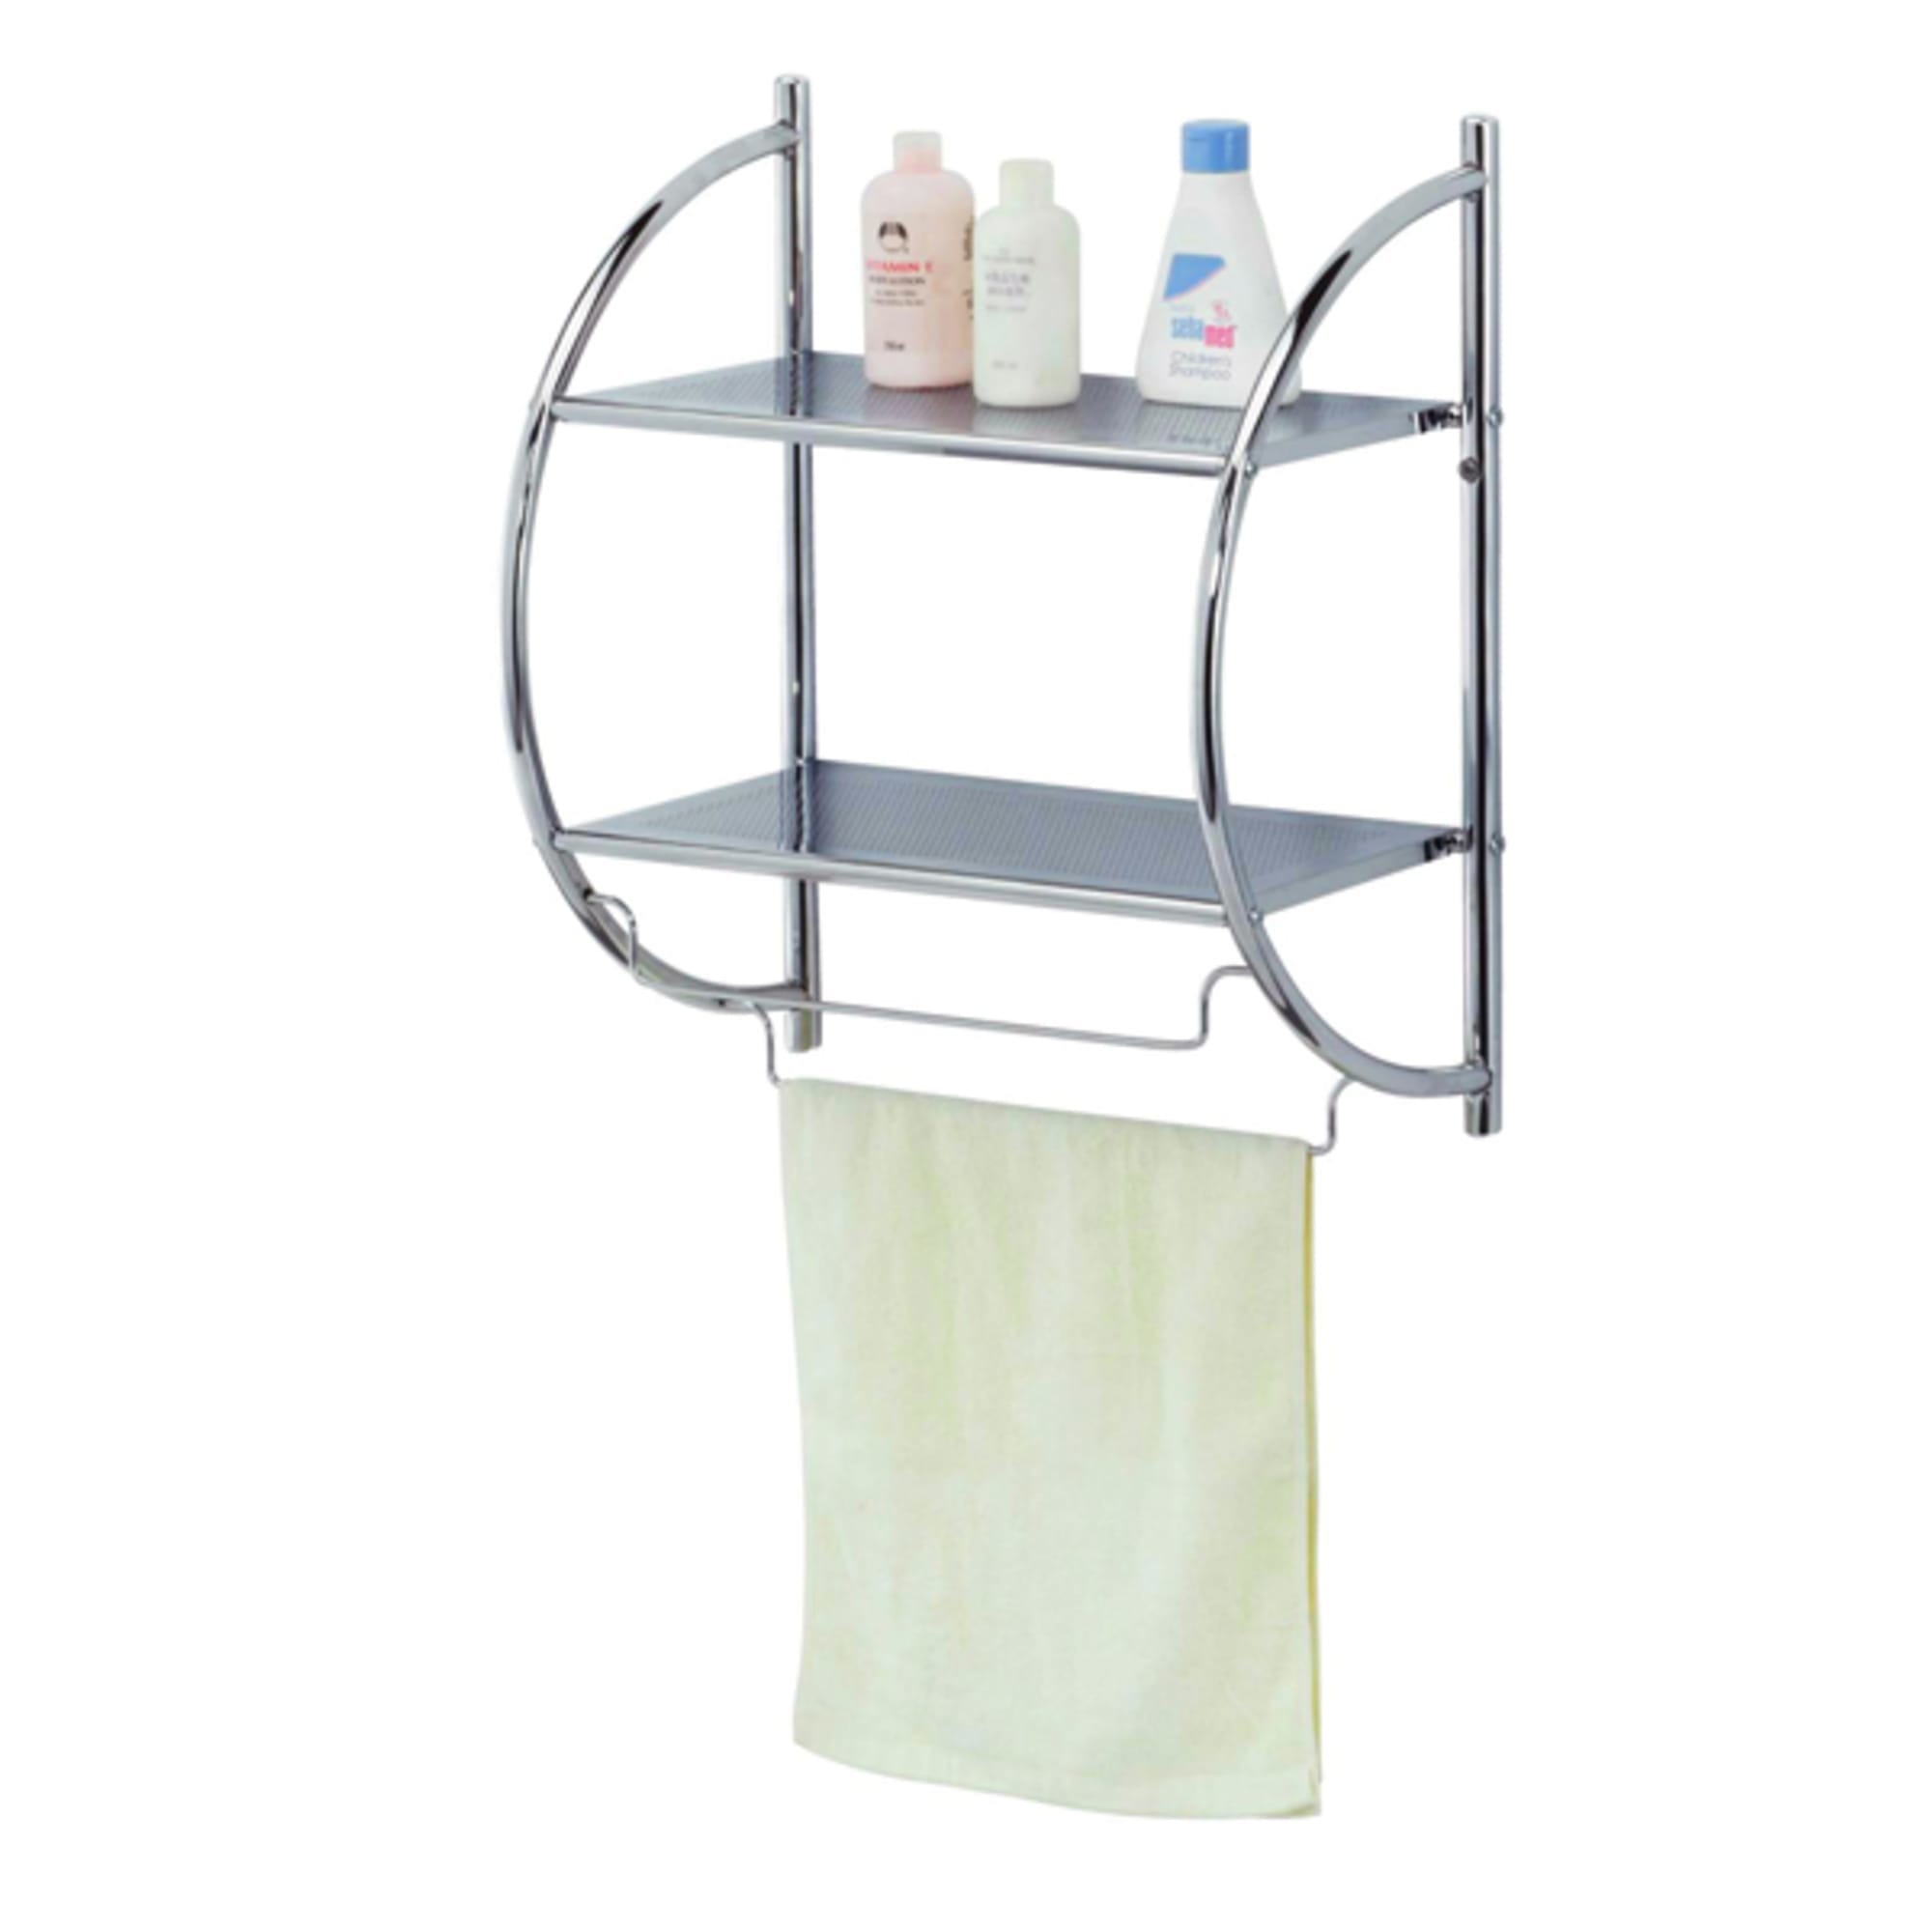 2 Tier Wall Mounting Chrome Plated Steel Bathroom Shelf with Towel